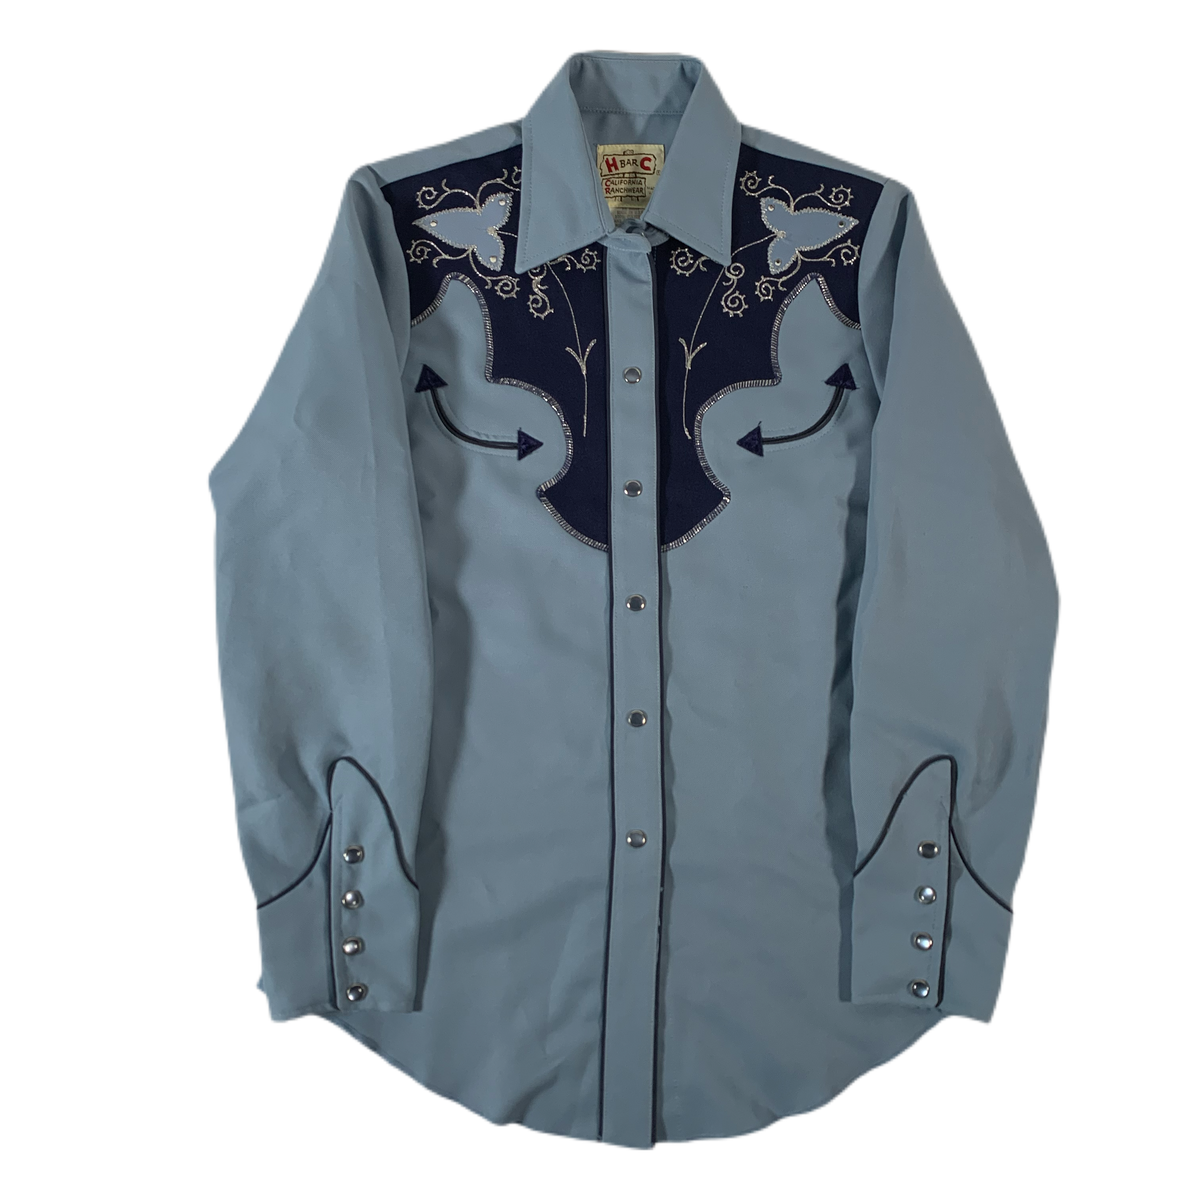 Vintage H Bar C “California Ranchwear” Wichita Shirt - jointcustodydc